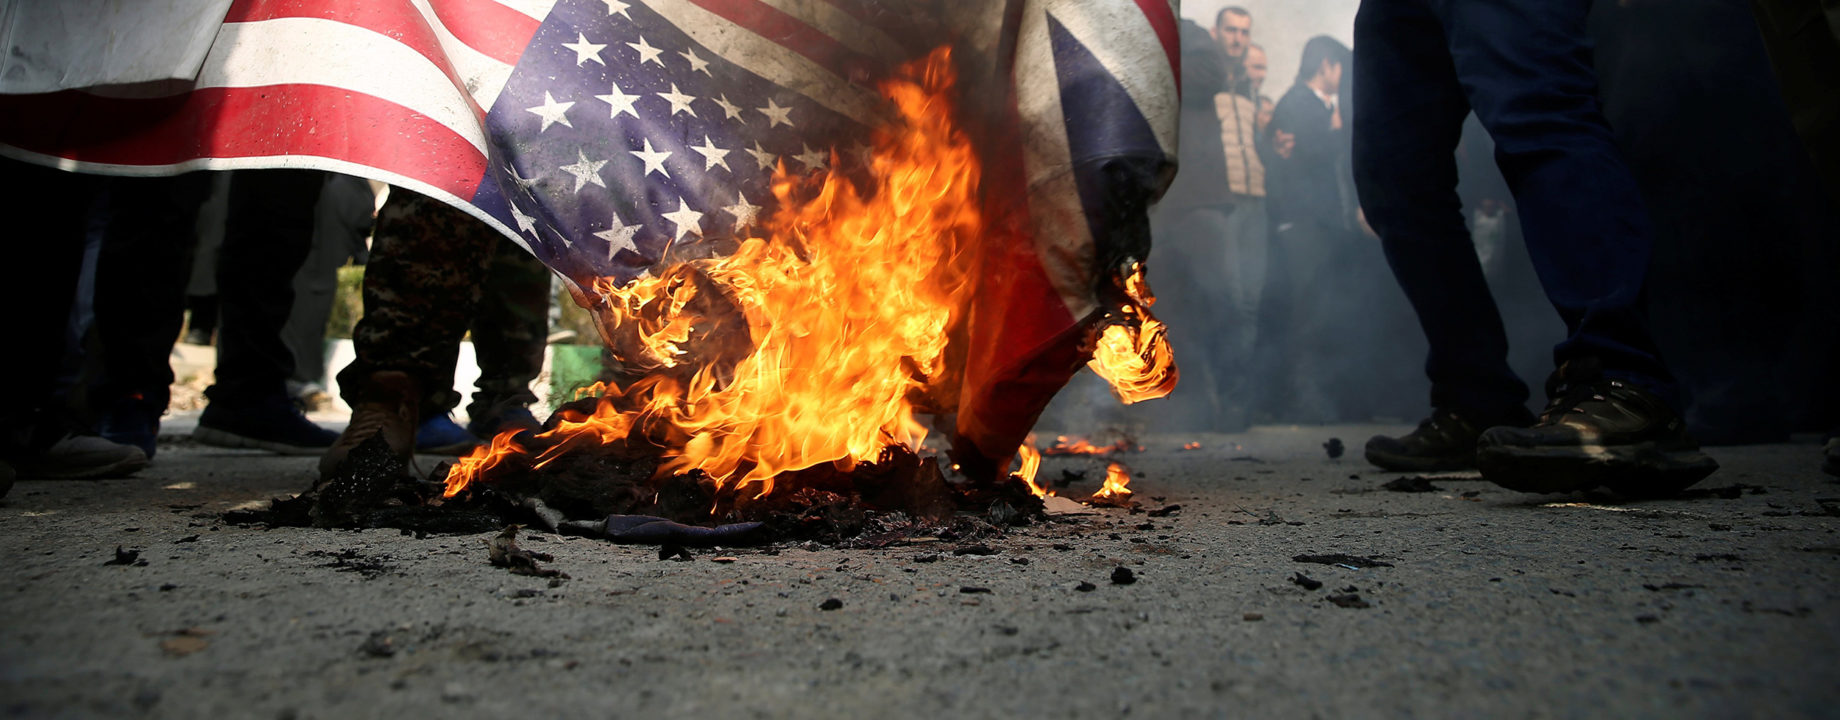 200103 think iran flag burning se 649p